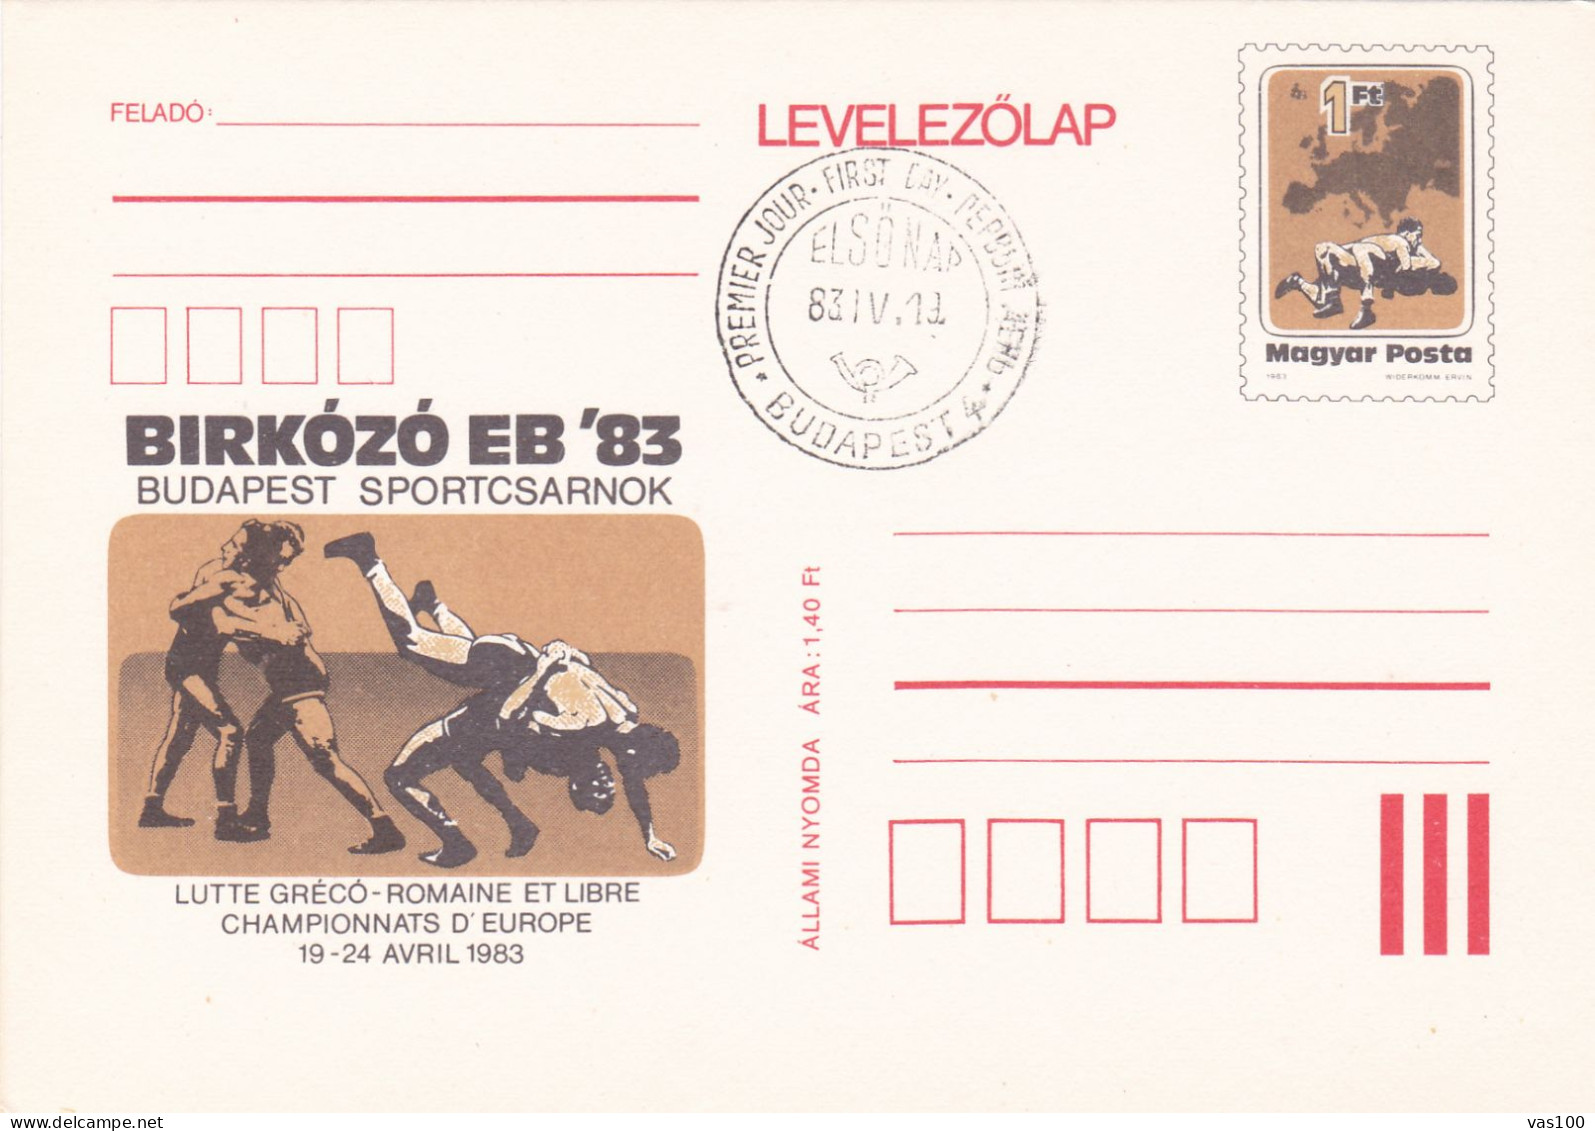 LUTTE GRECO-ROMAINE ET LIBERE, POST CARD STATIONERY, OBLITERATION  FDC 1983, ROMANIA - Ringen